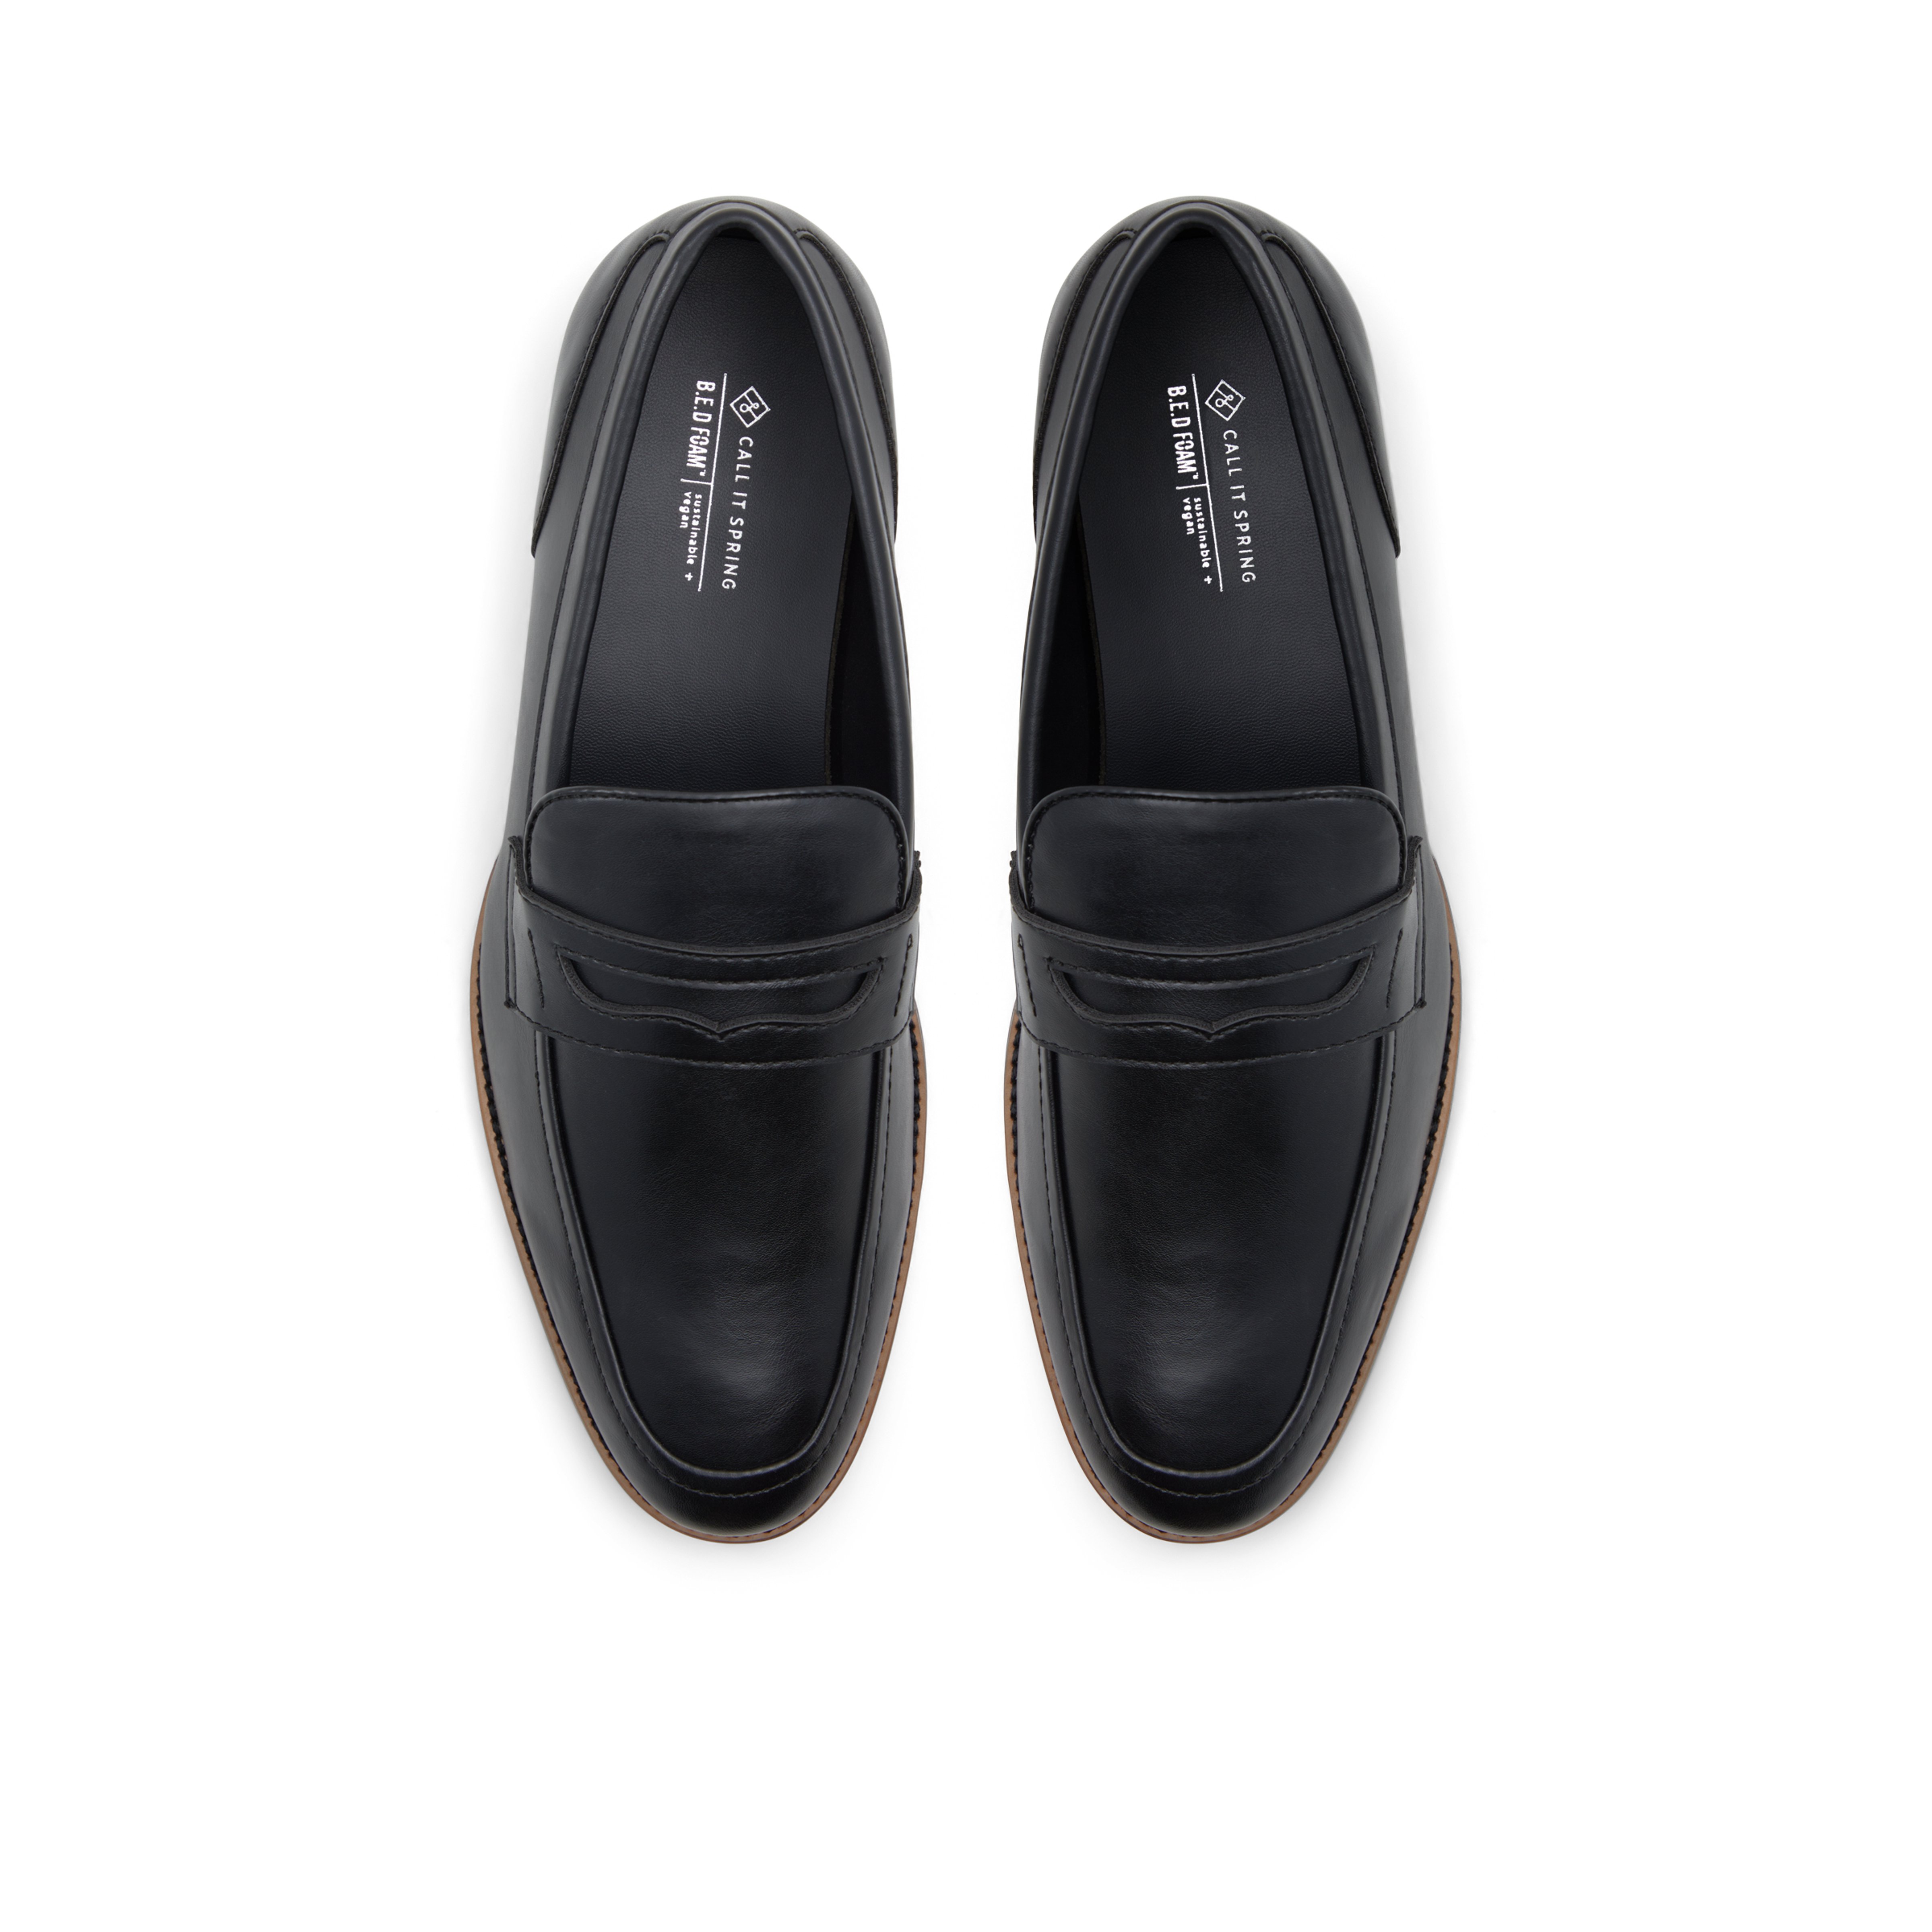 Pinchard Men's Black Dress Loafers